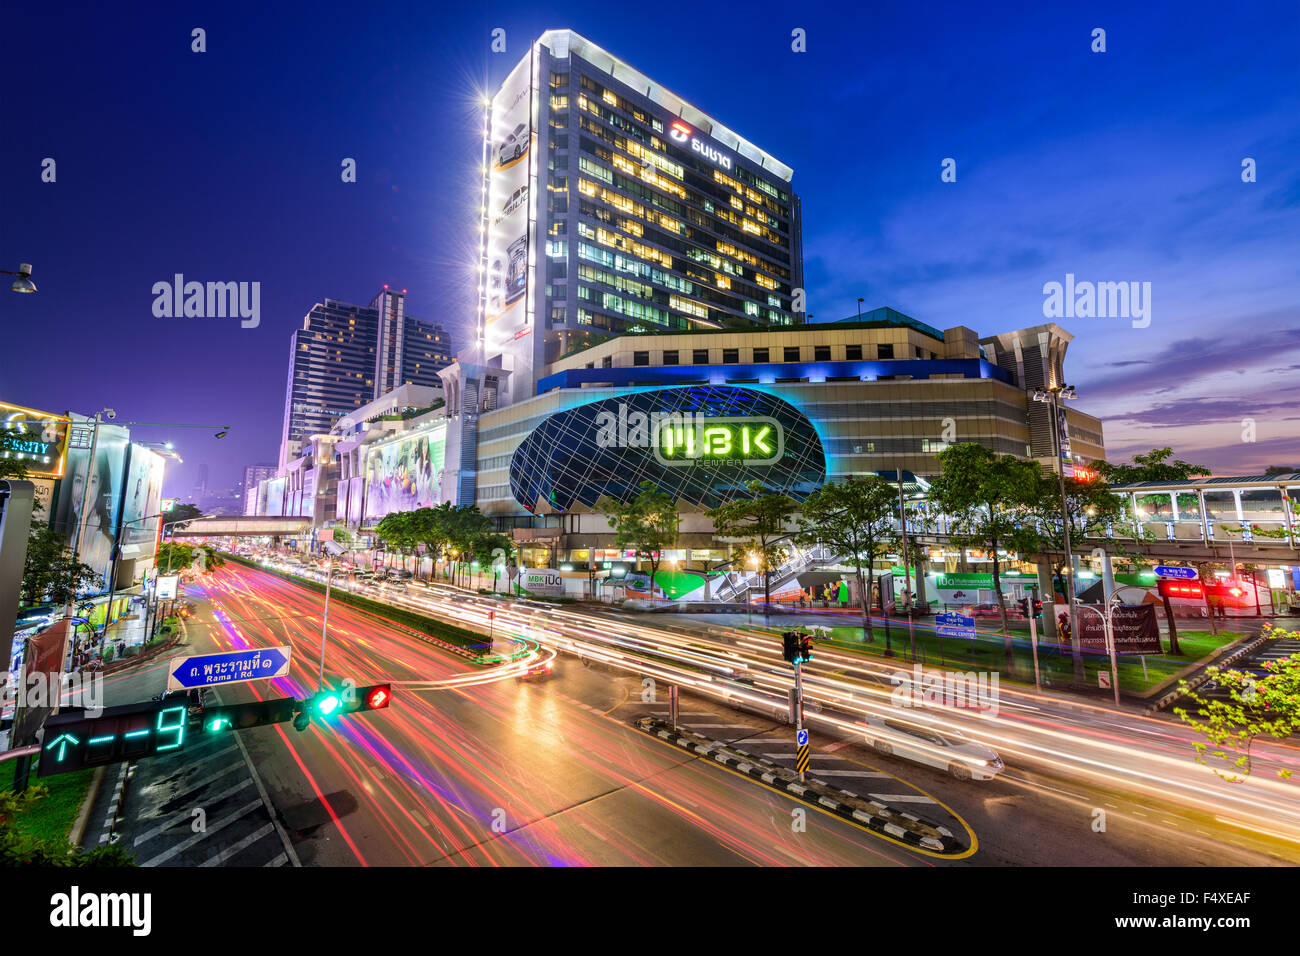 MBK Einkaufszentrum in Bangkok, Thailand. Stockfoto